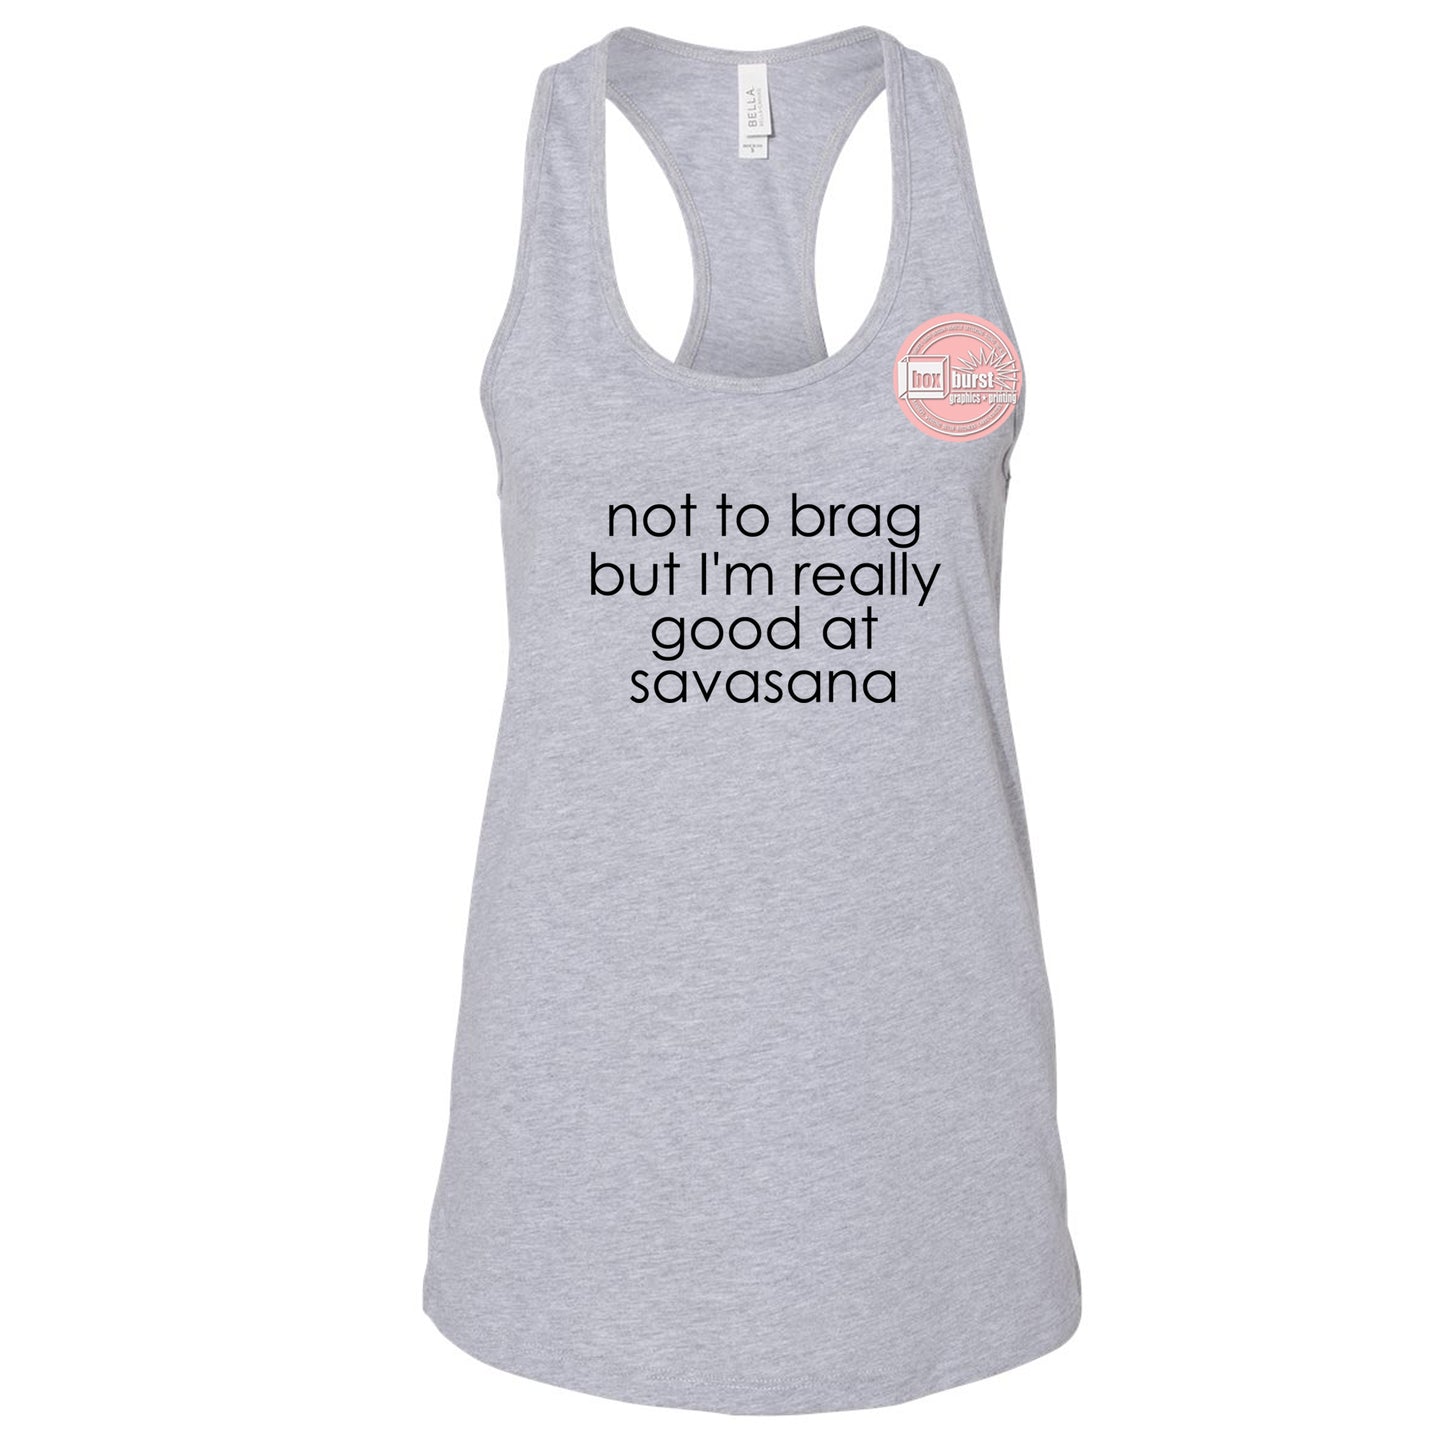 Savasana tank top racerback women's yoga tank top